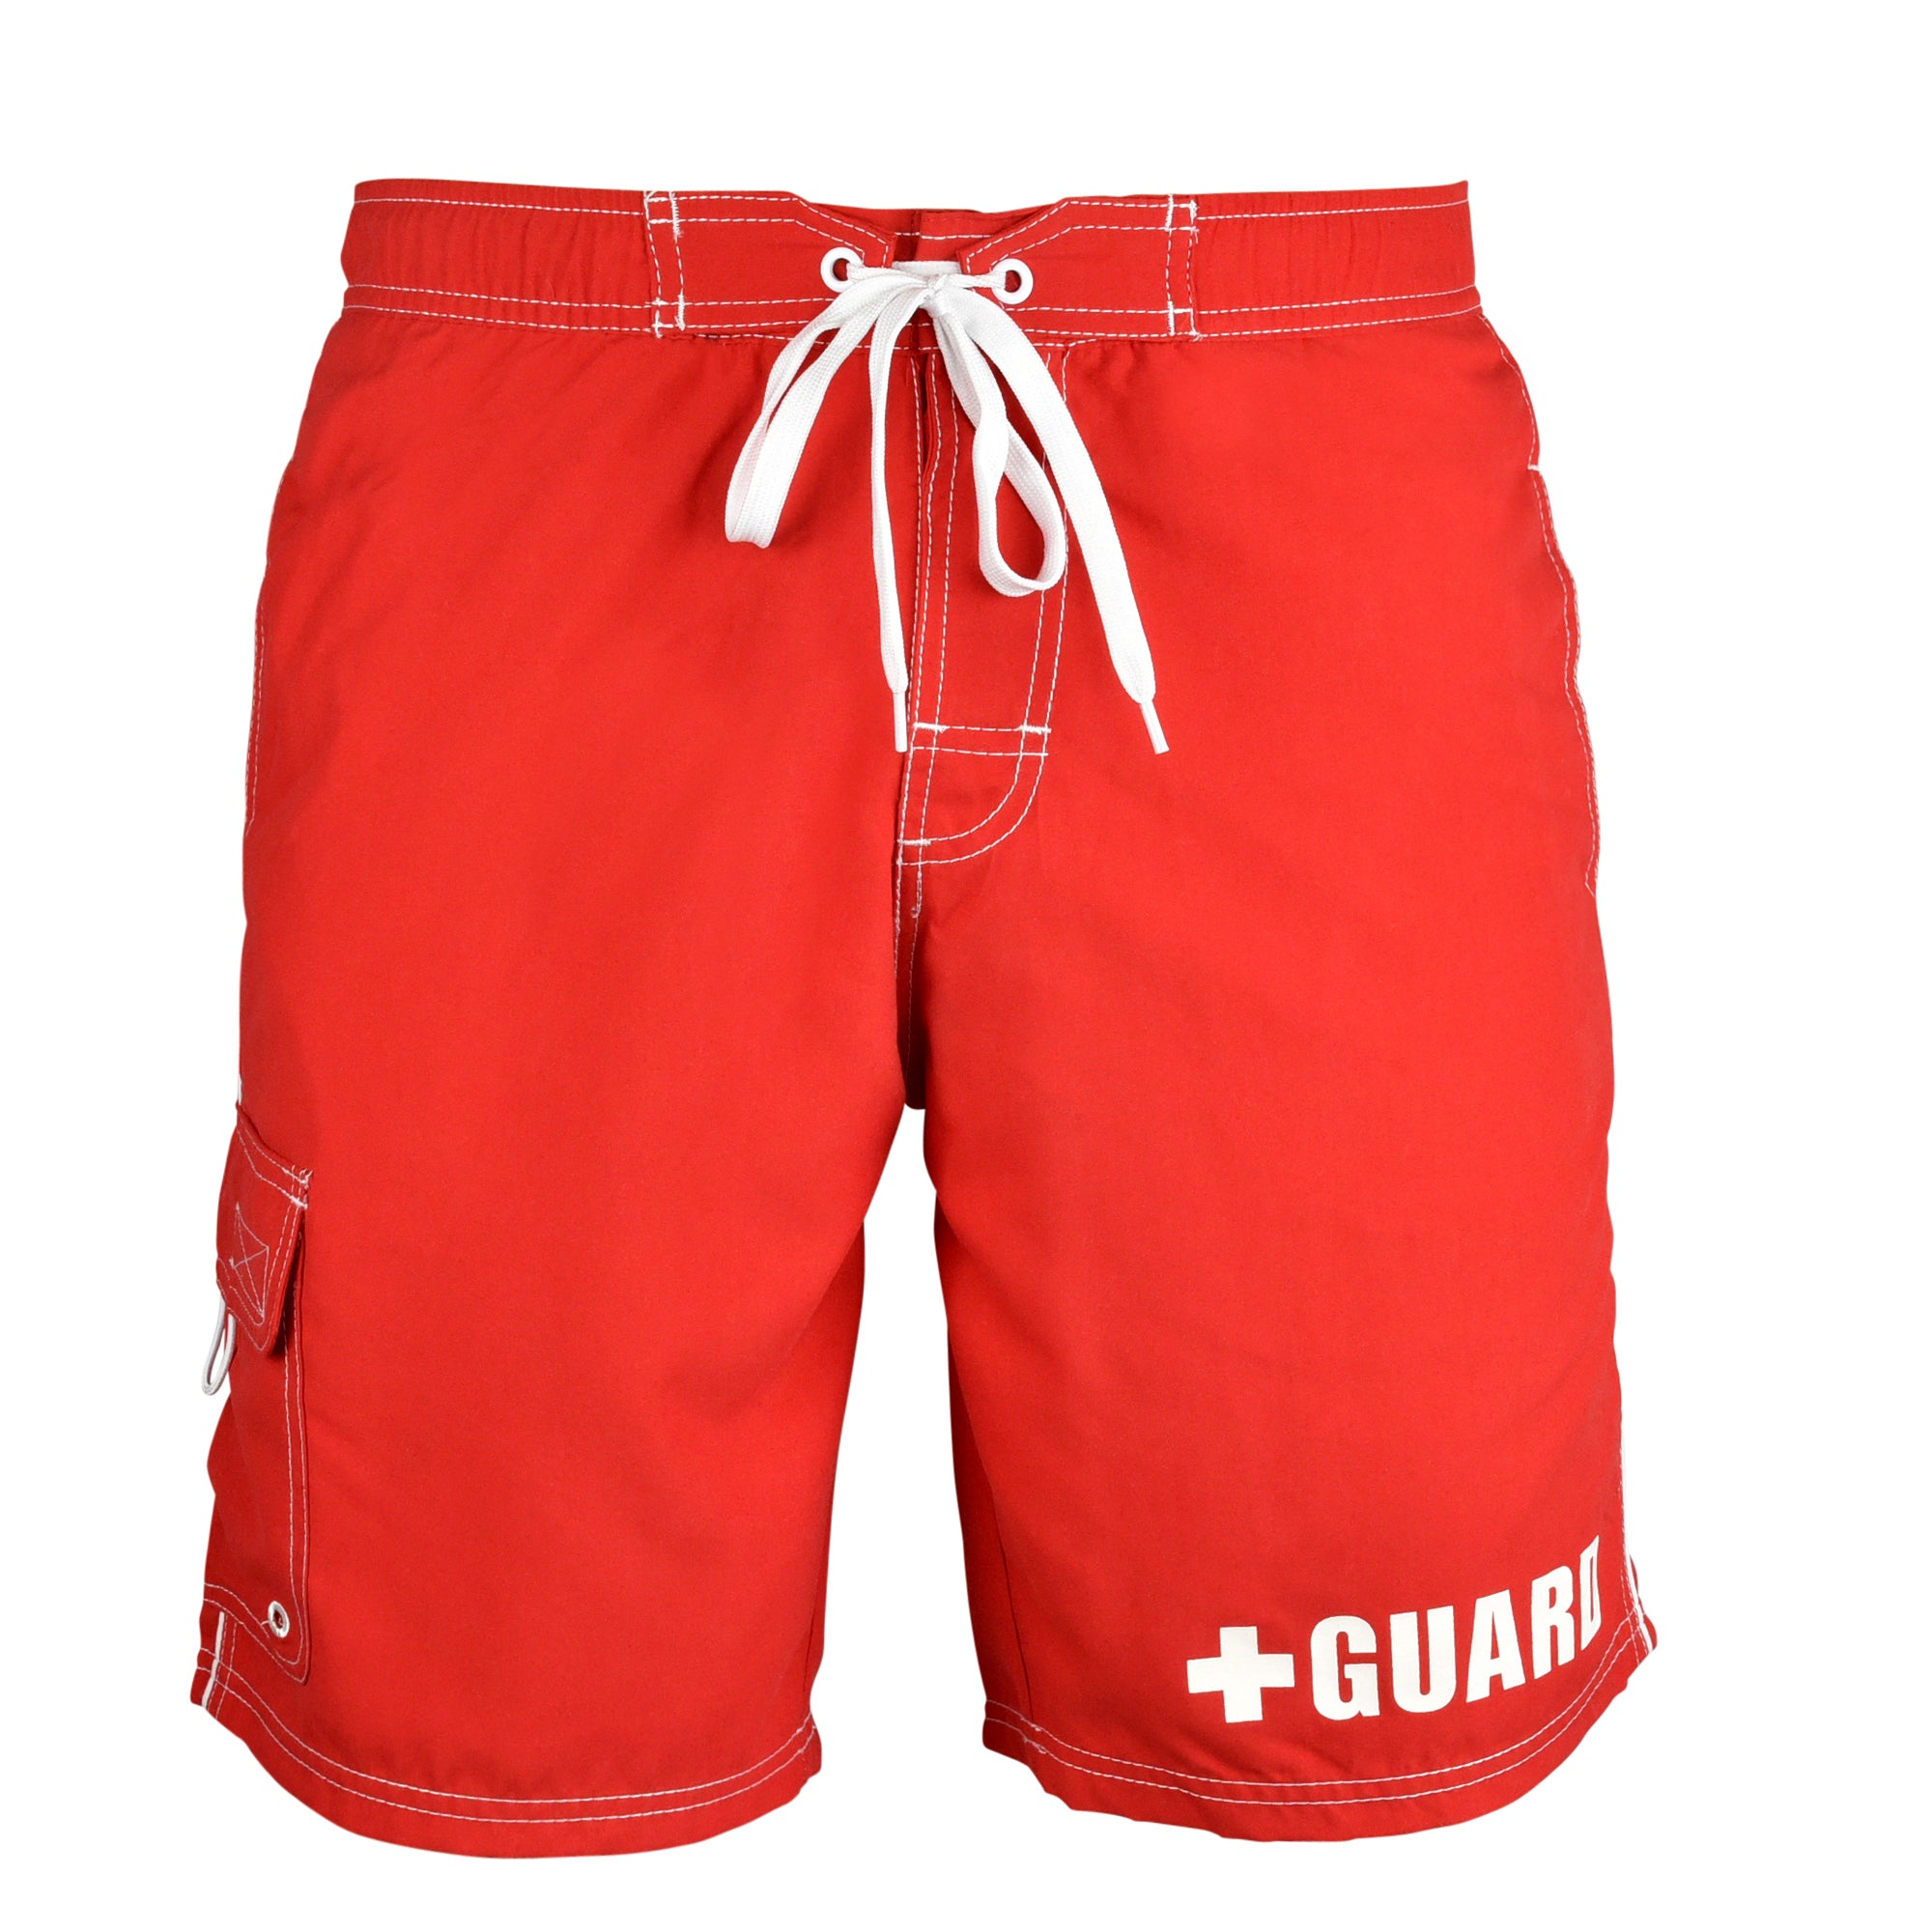 Lifeguard Men's Swim Trunks - BLARIX